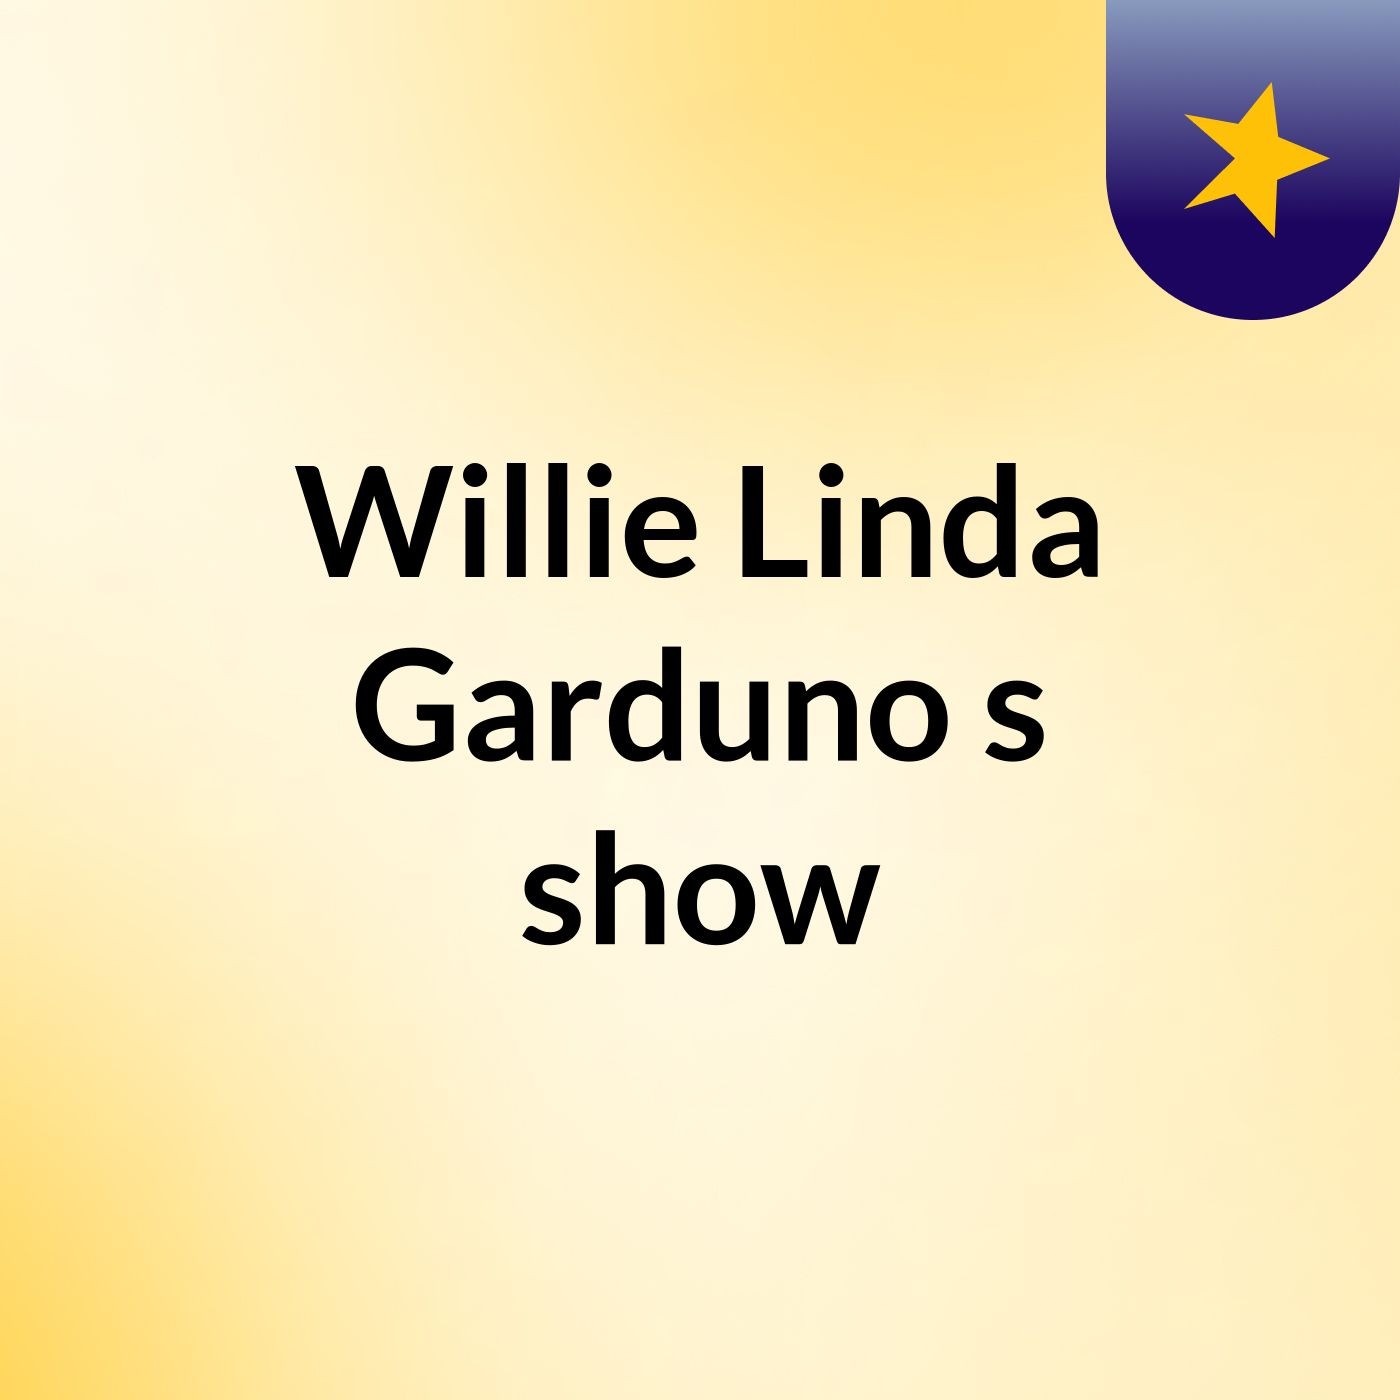 Willie Linda Garduno's show